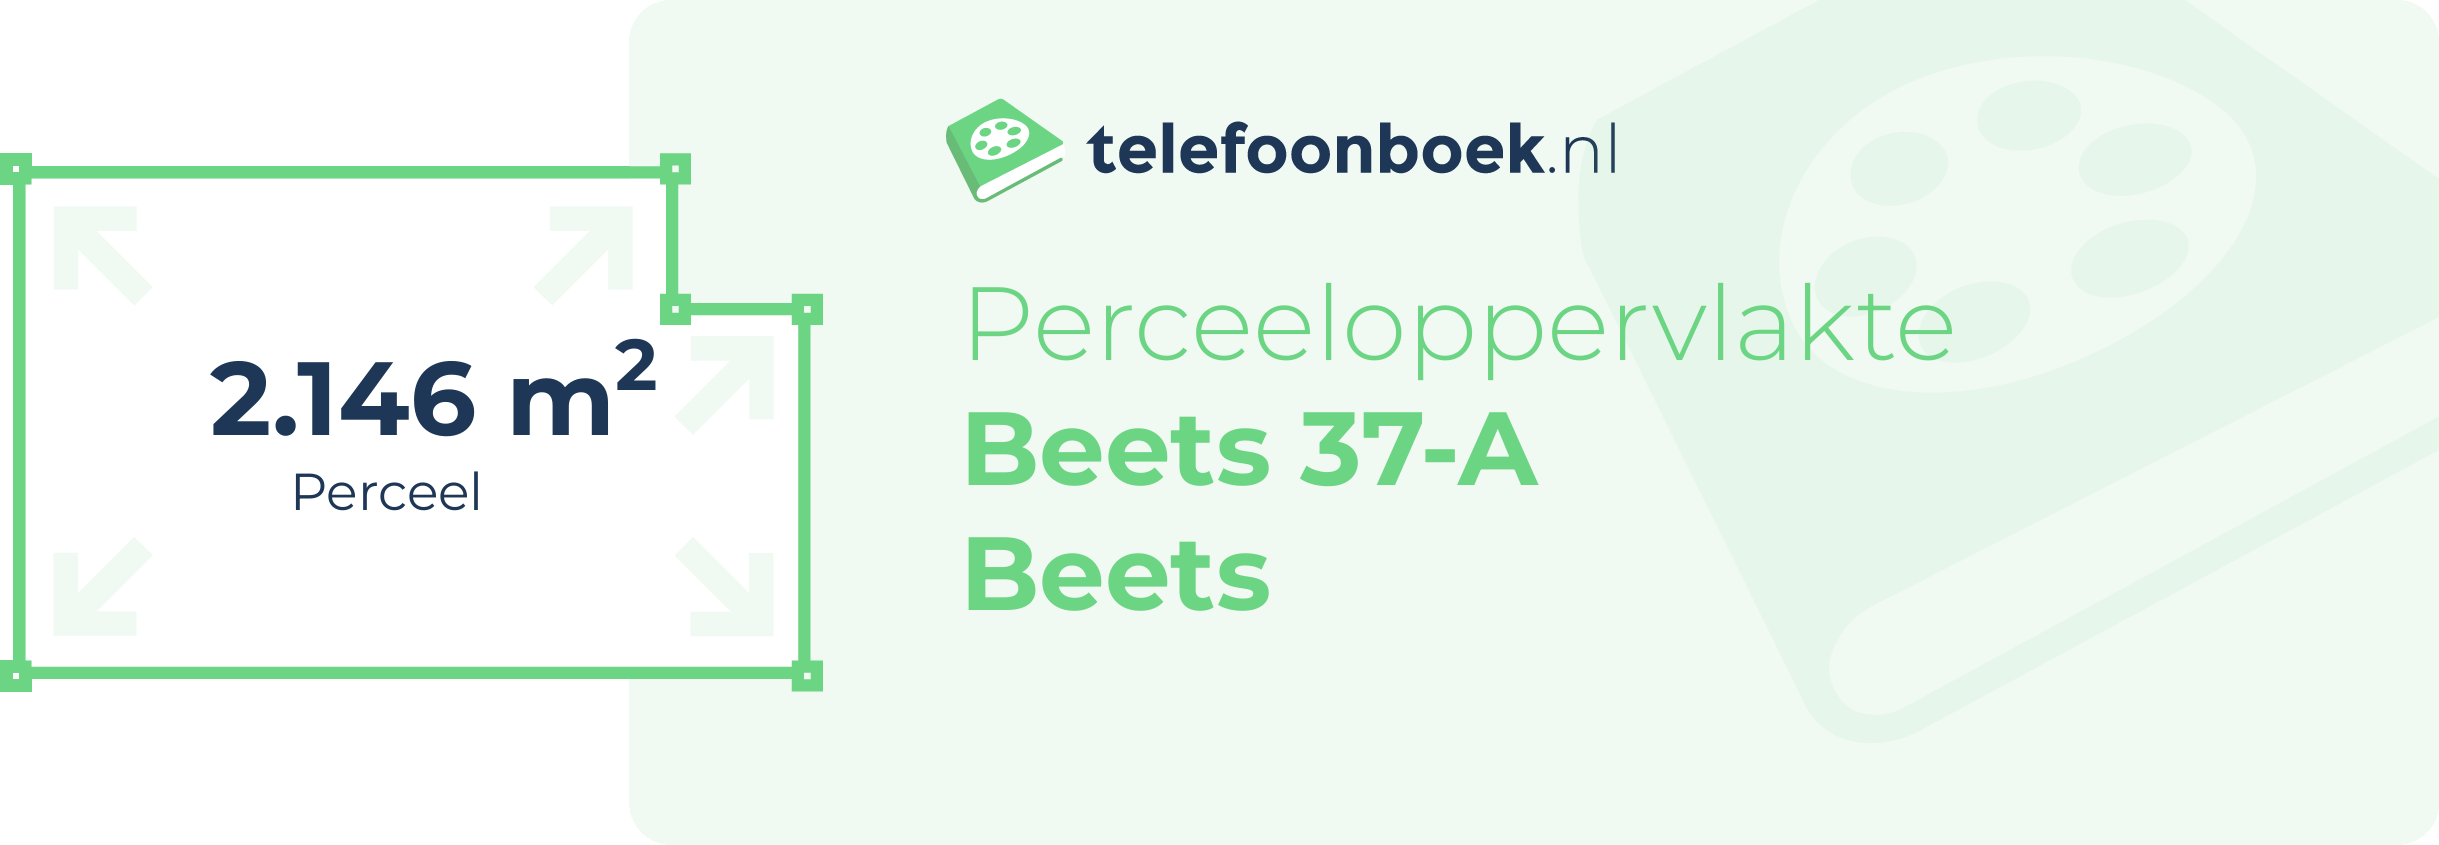 Perceeloppervlakte Beets 37-A Beets